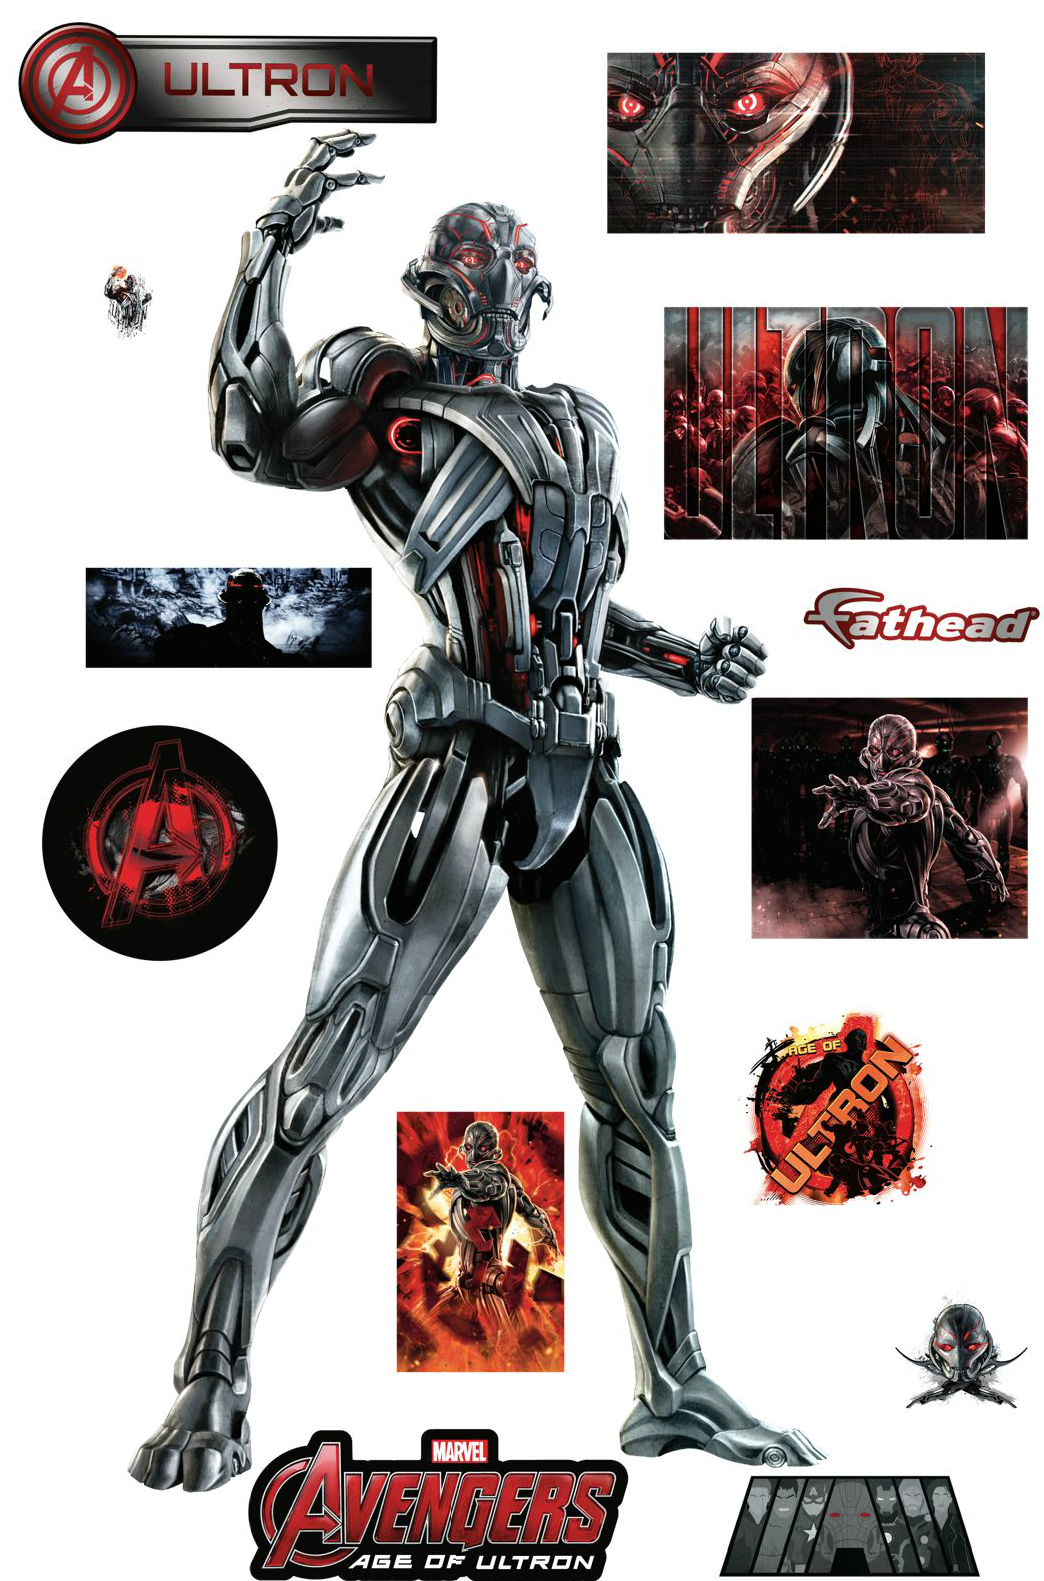 Avengers: Age of Ultron promo art